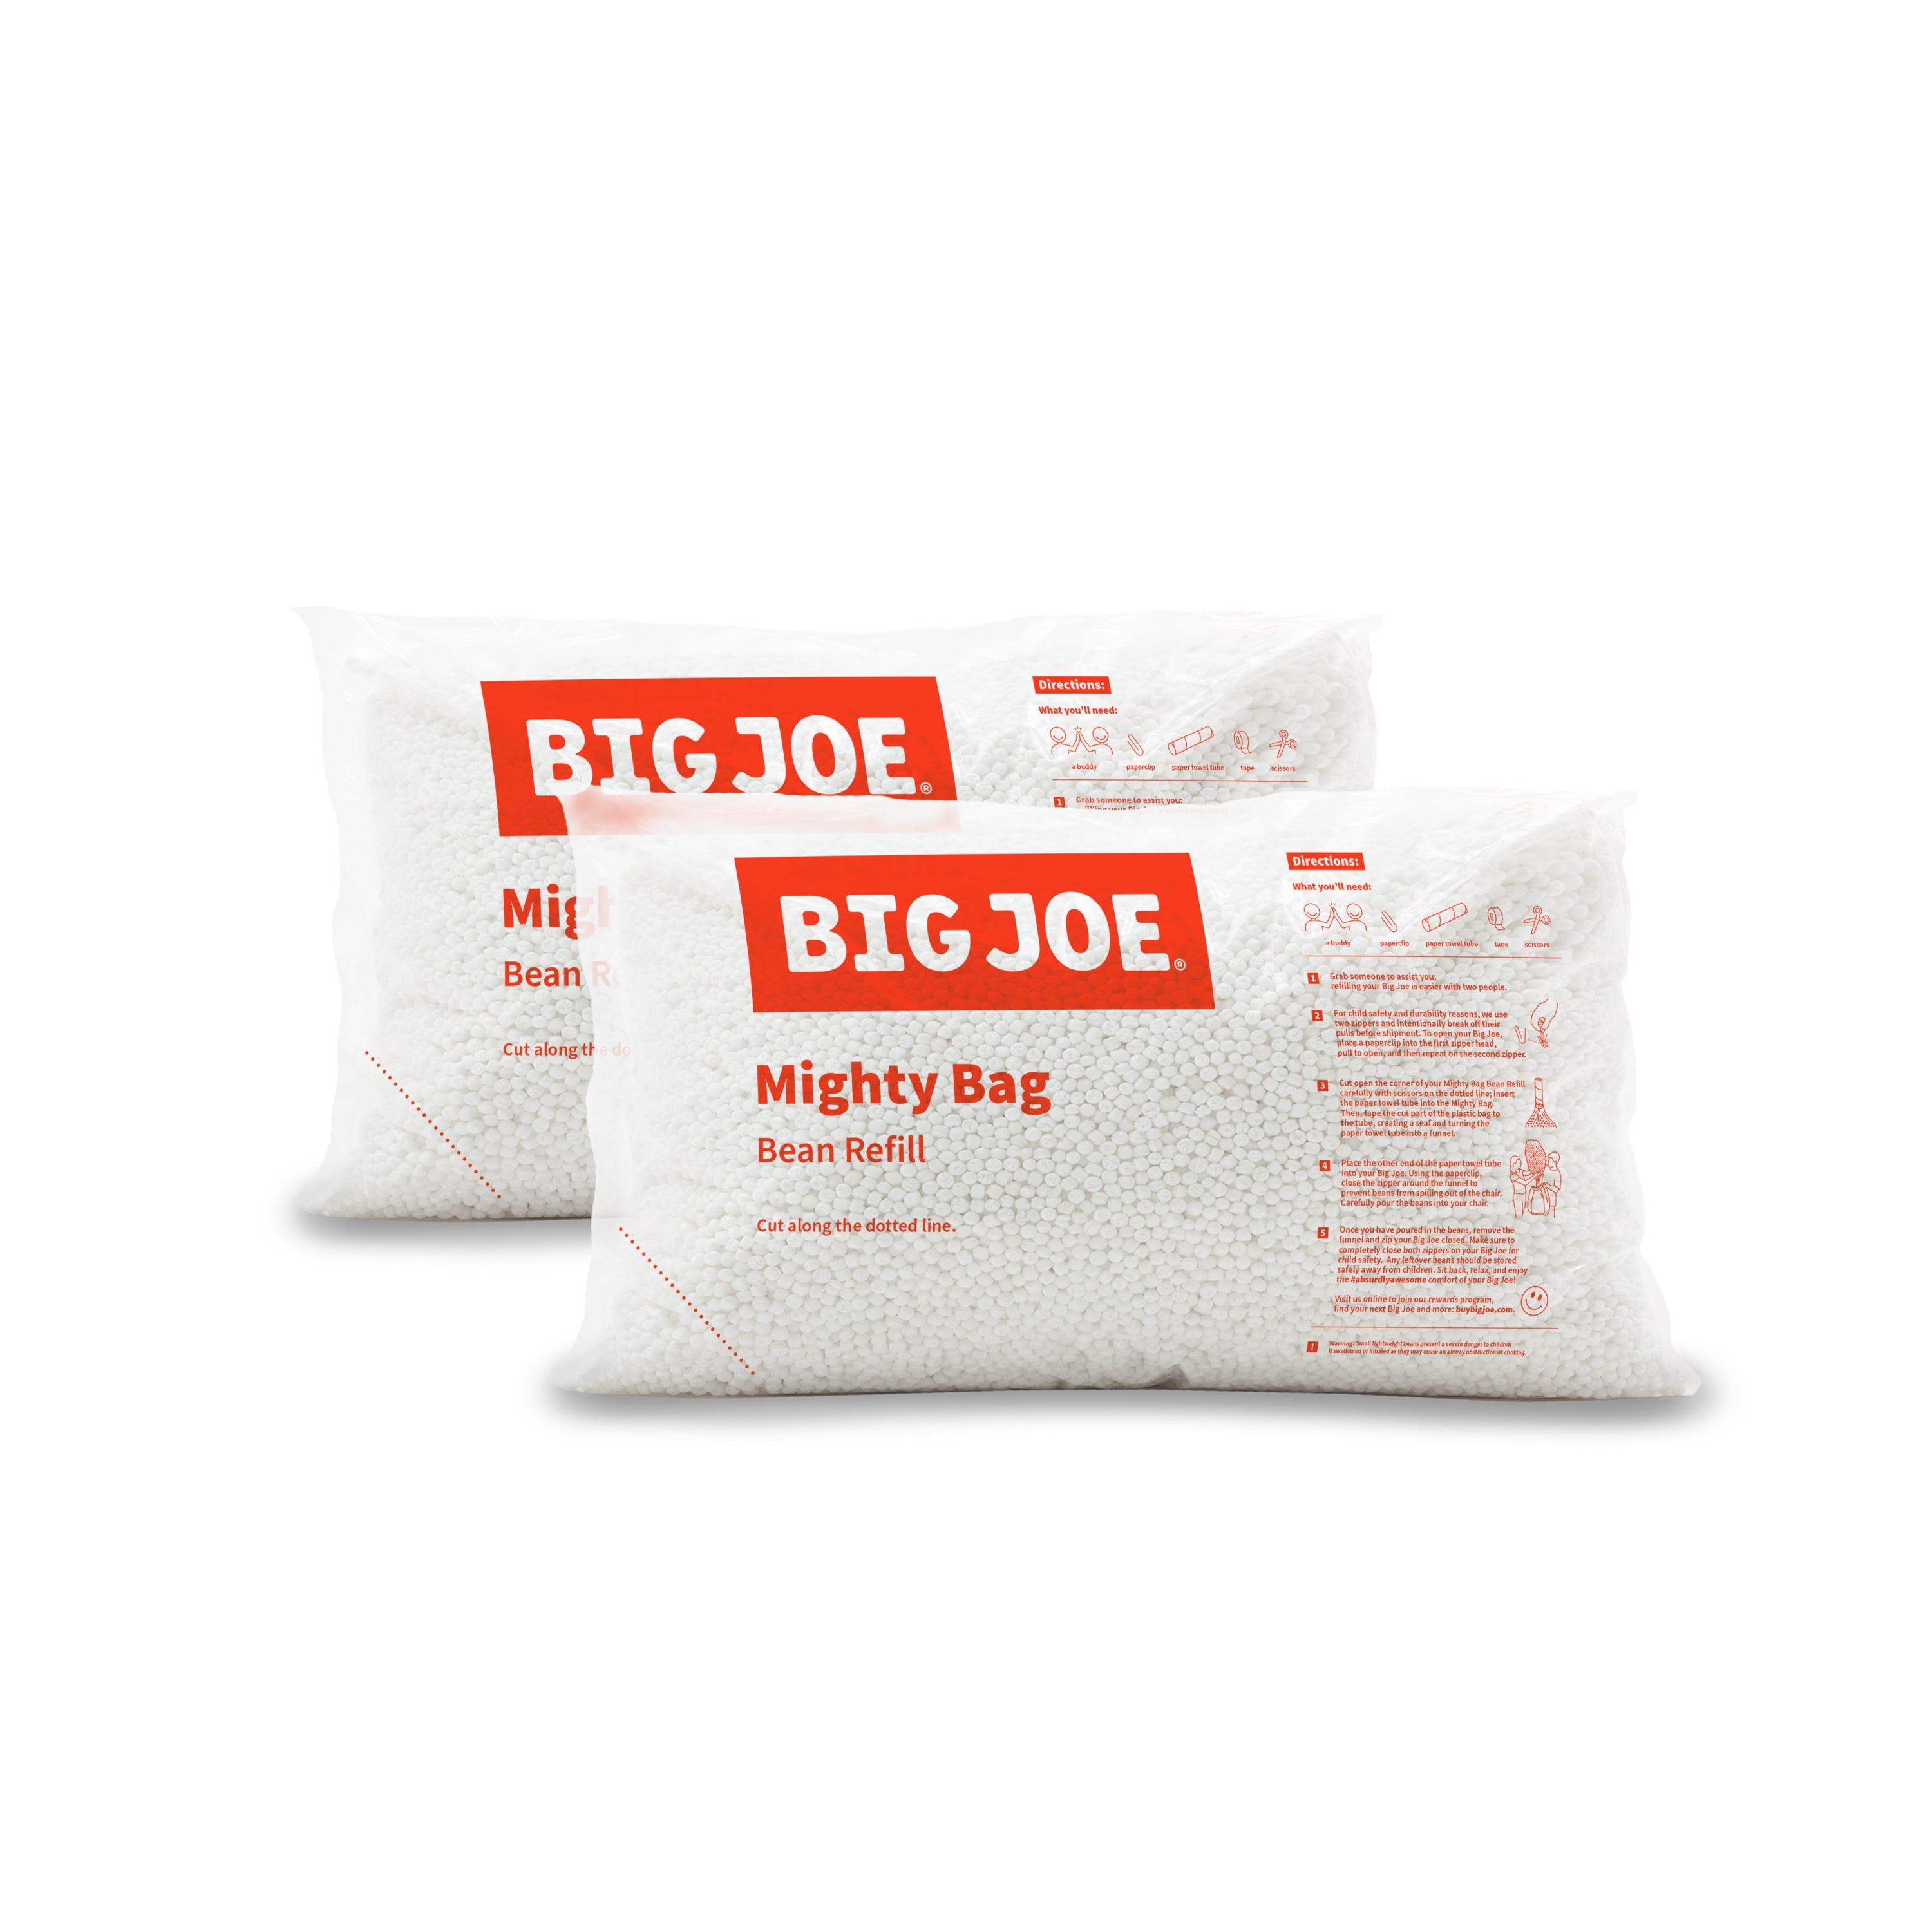 Mighty Bag Brand New Big Joe Megahh Bean Bags Refill